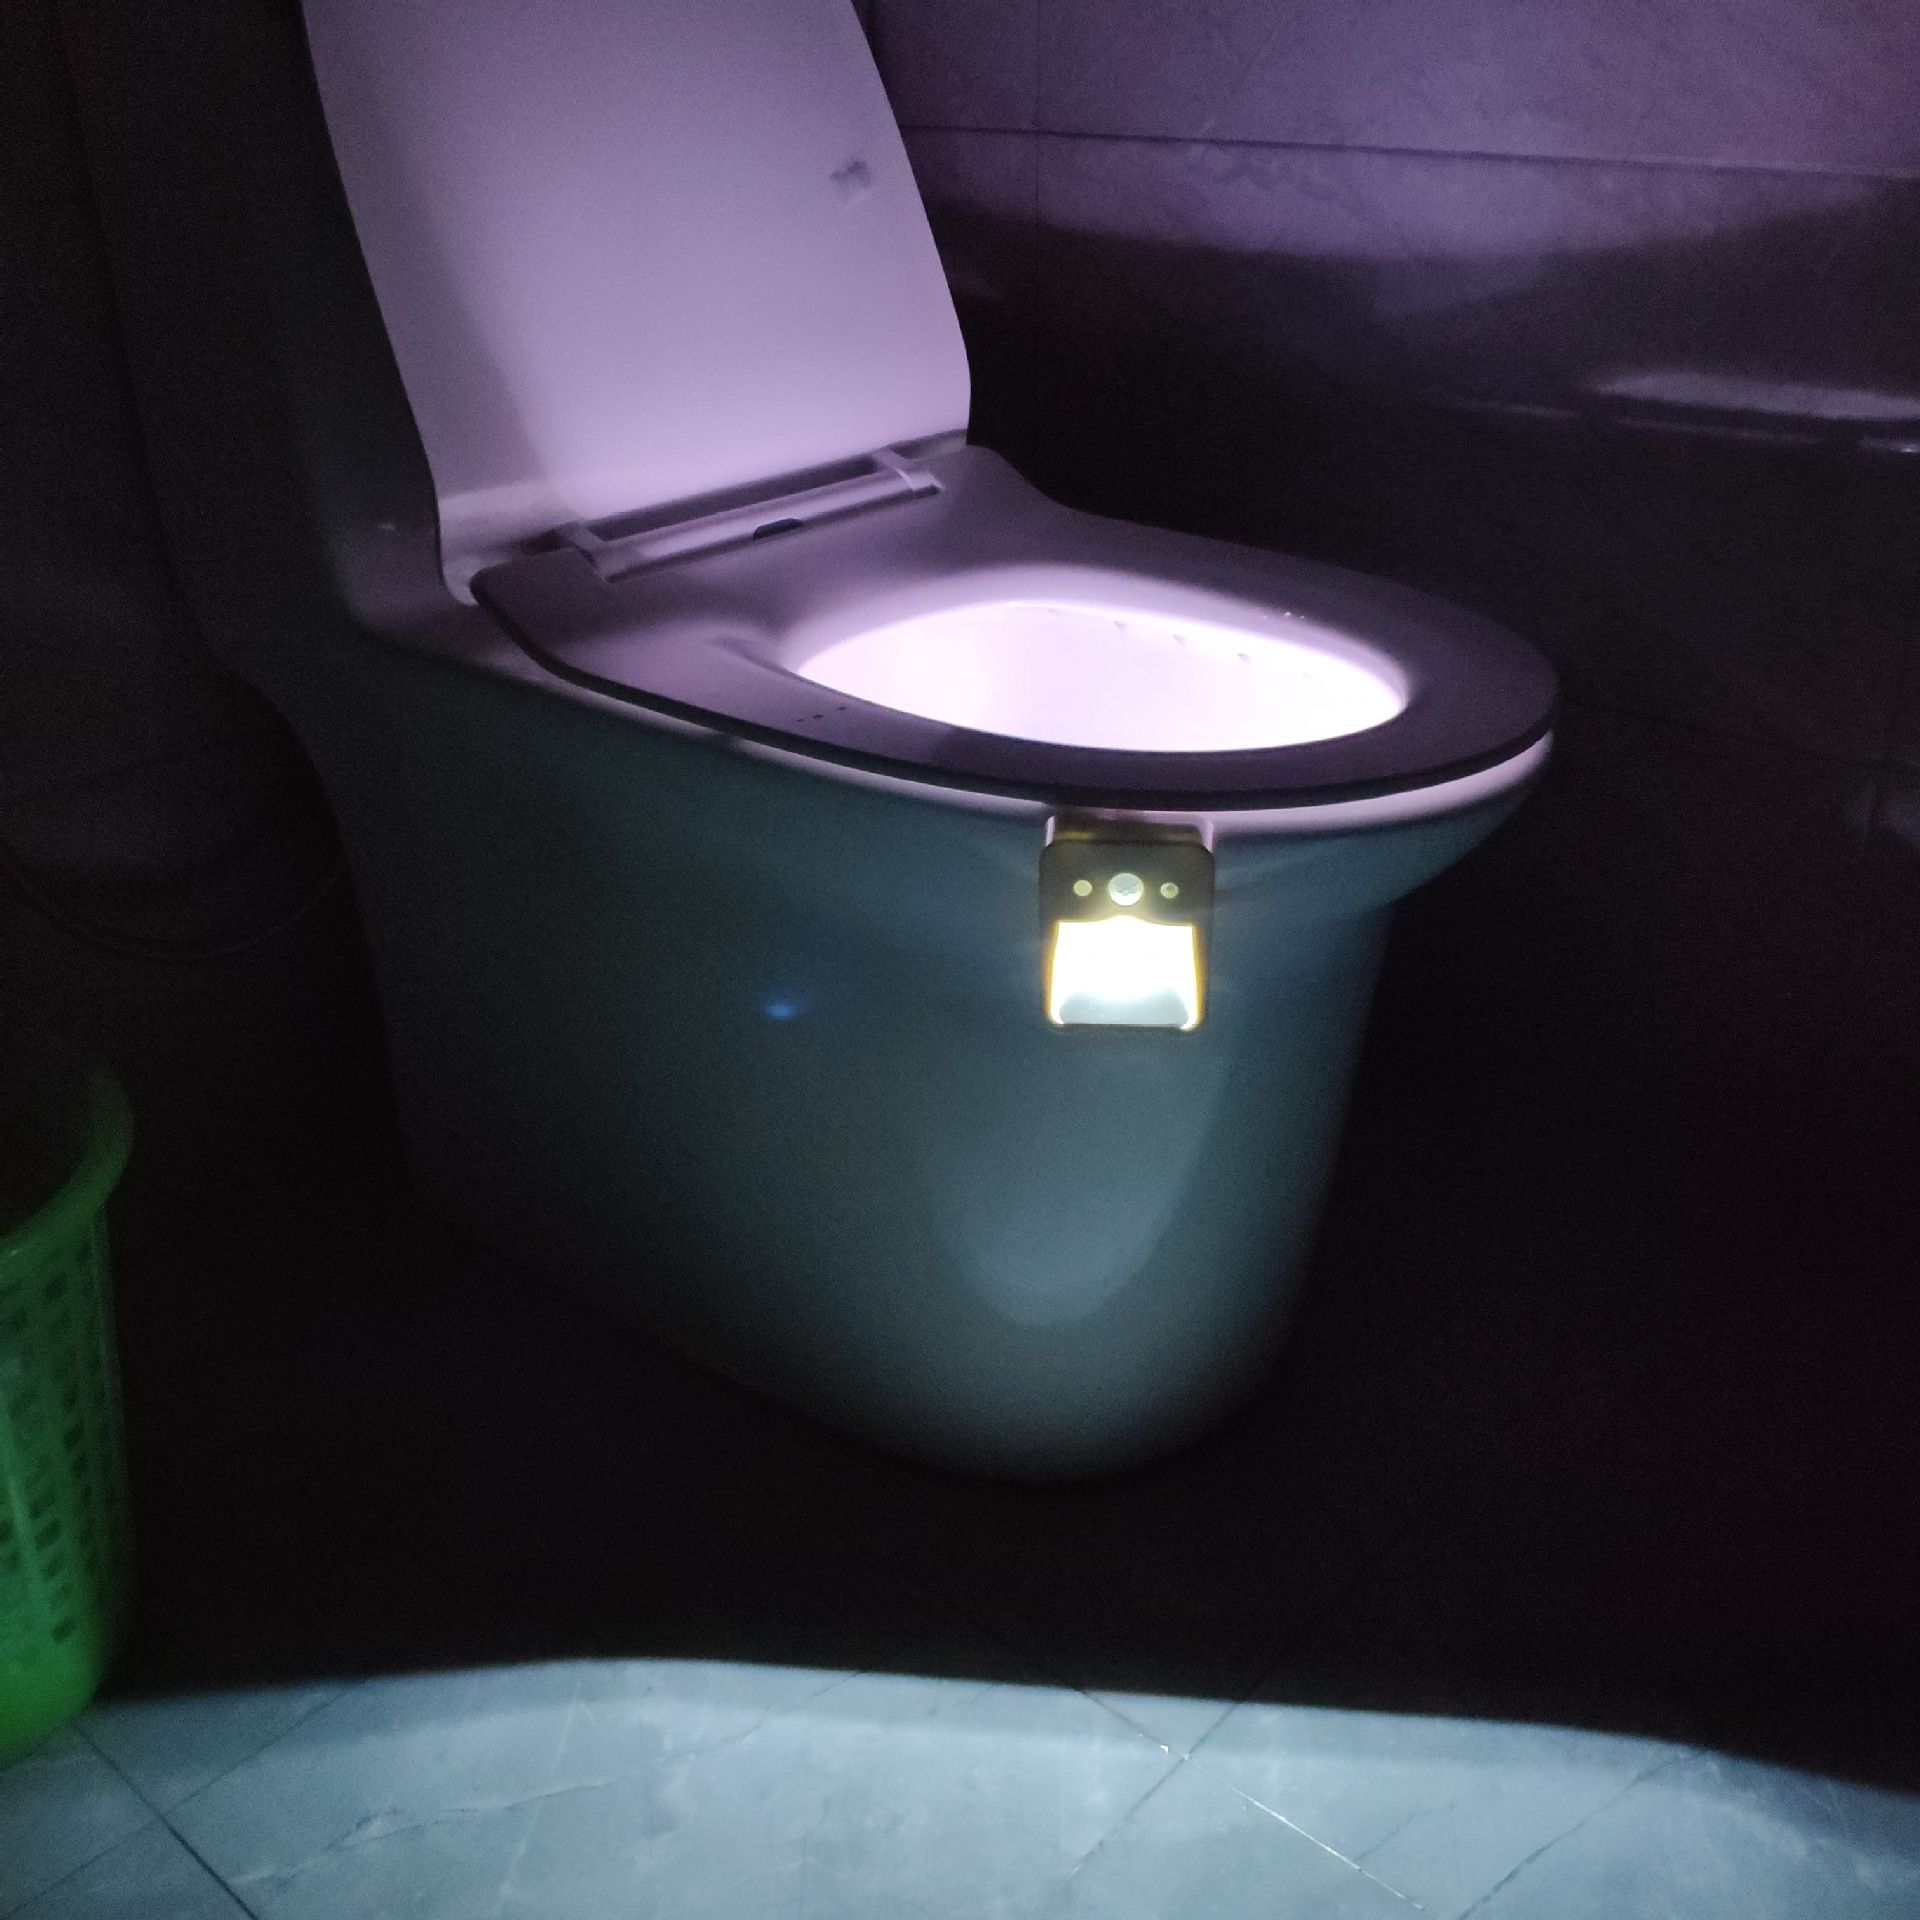 16-Colors-LED-Induction-Toilet-Light-With-Aromatherapy-Toilet-Sensor-Night-Light-Decor-1754296